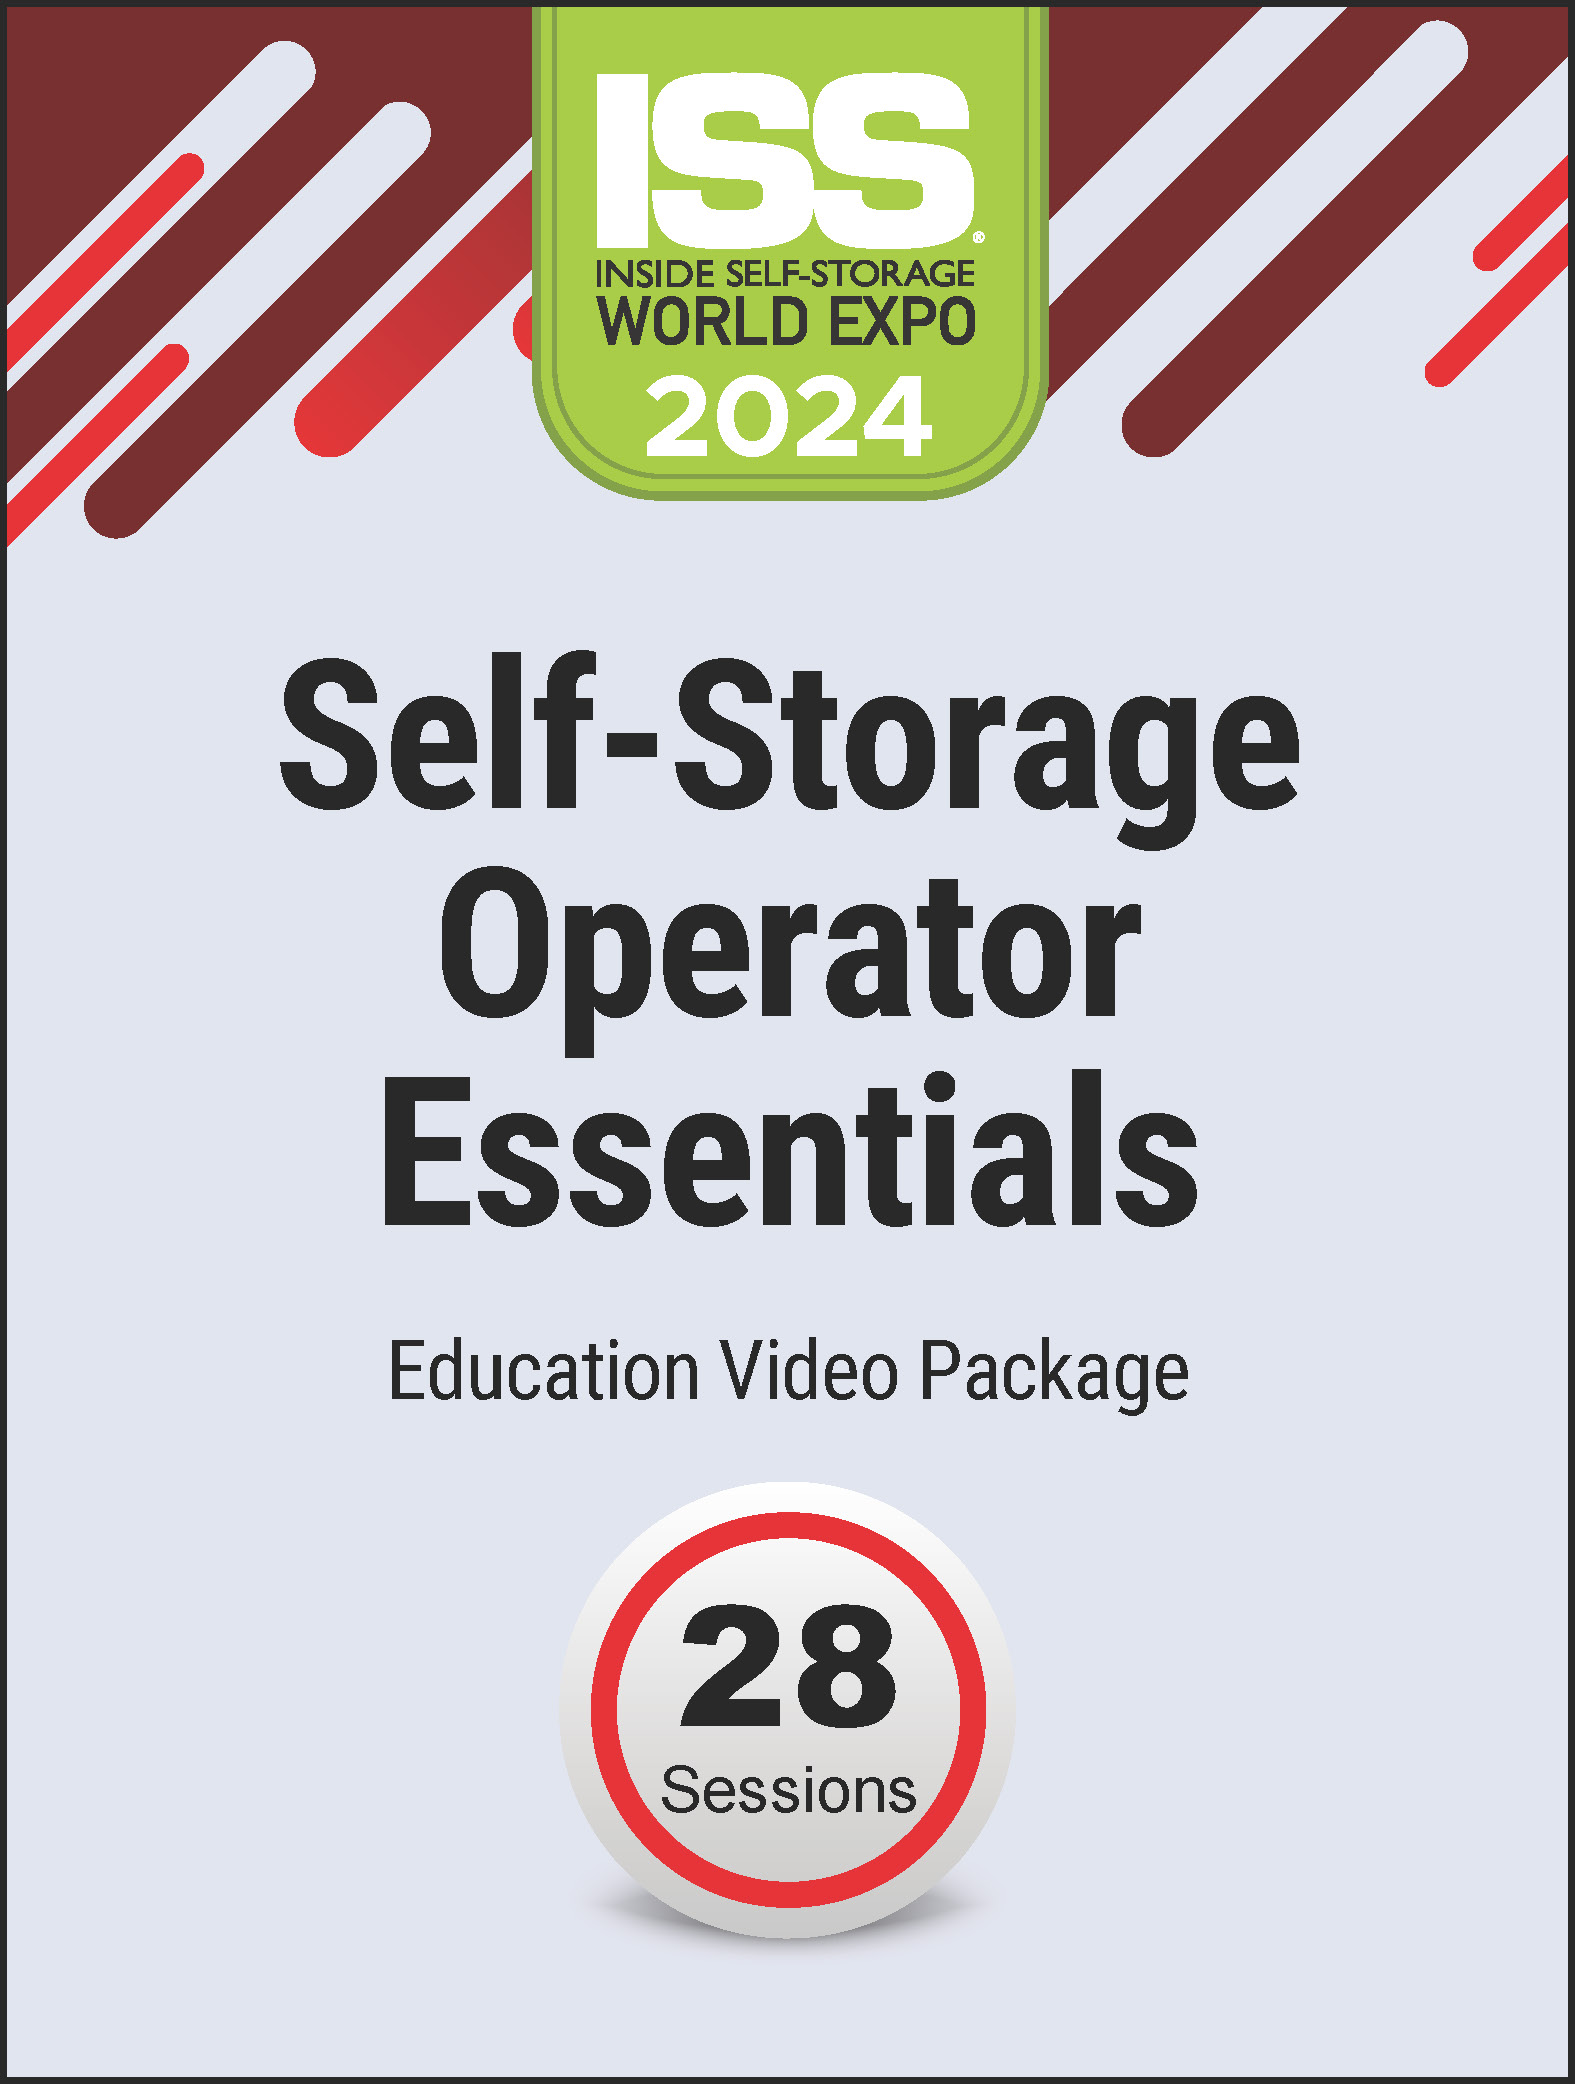 Video Pre-Order PDF - Self-Storage Operator Essentials 2024 Education Video Package